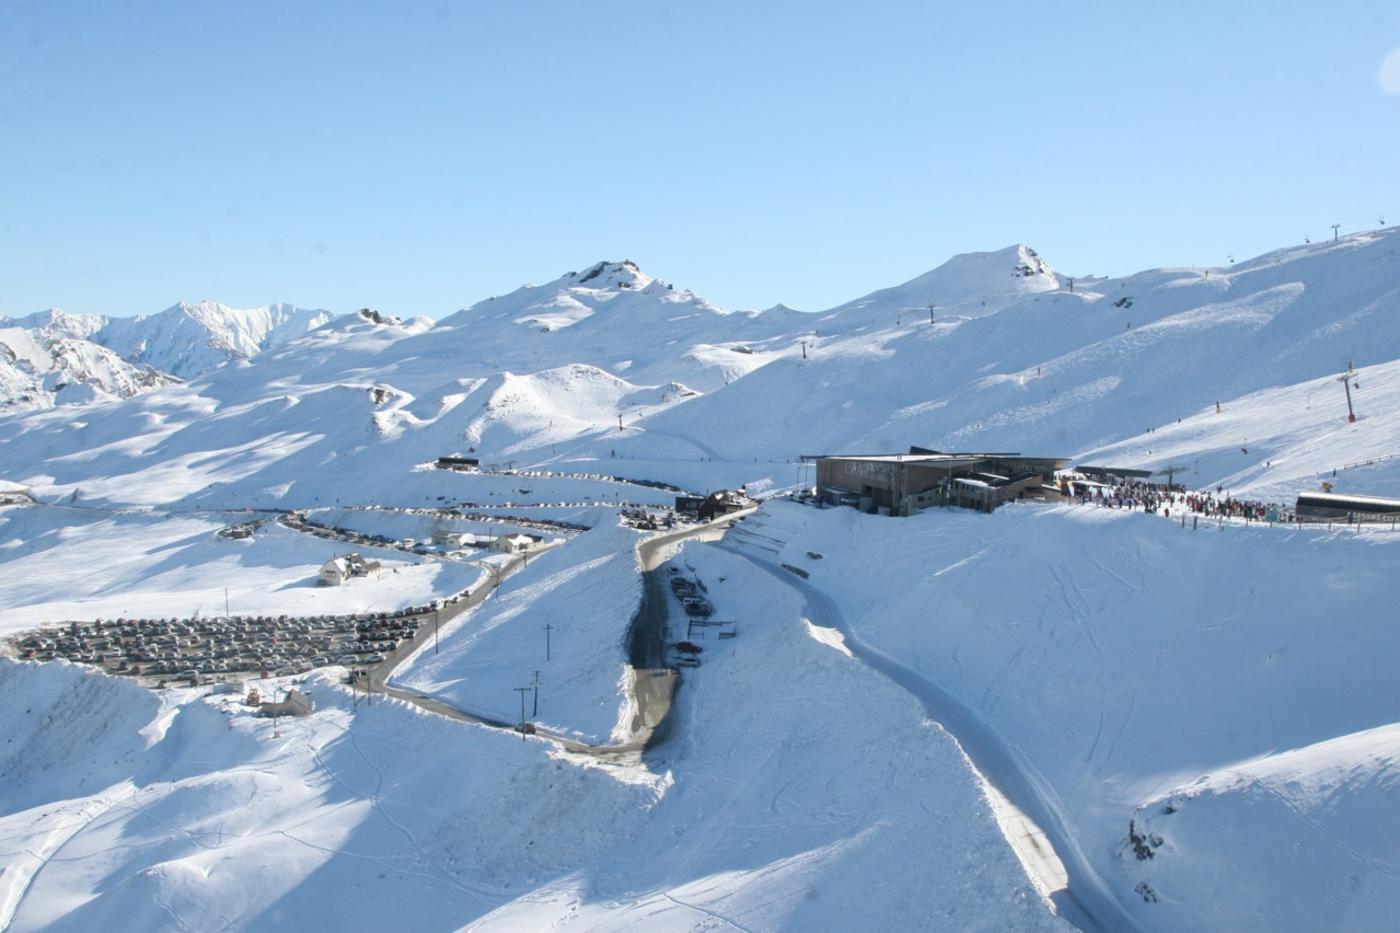 Coronet Peak aerial view over the ski field